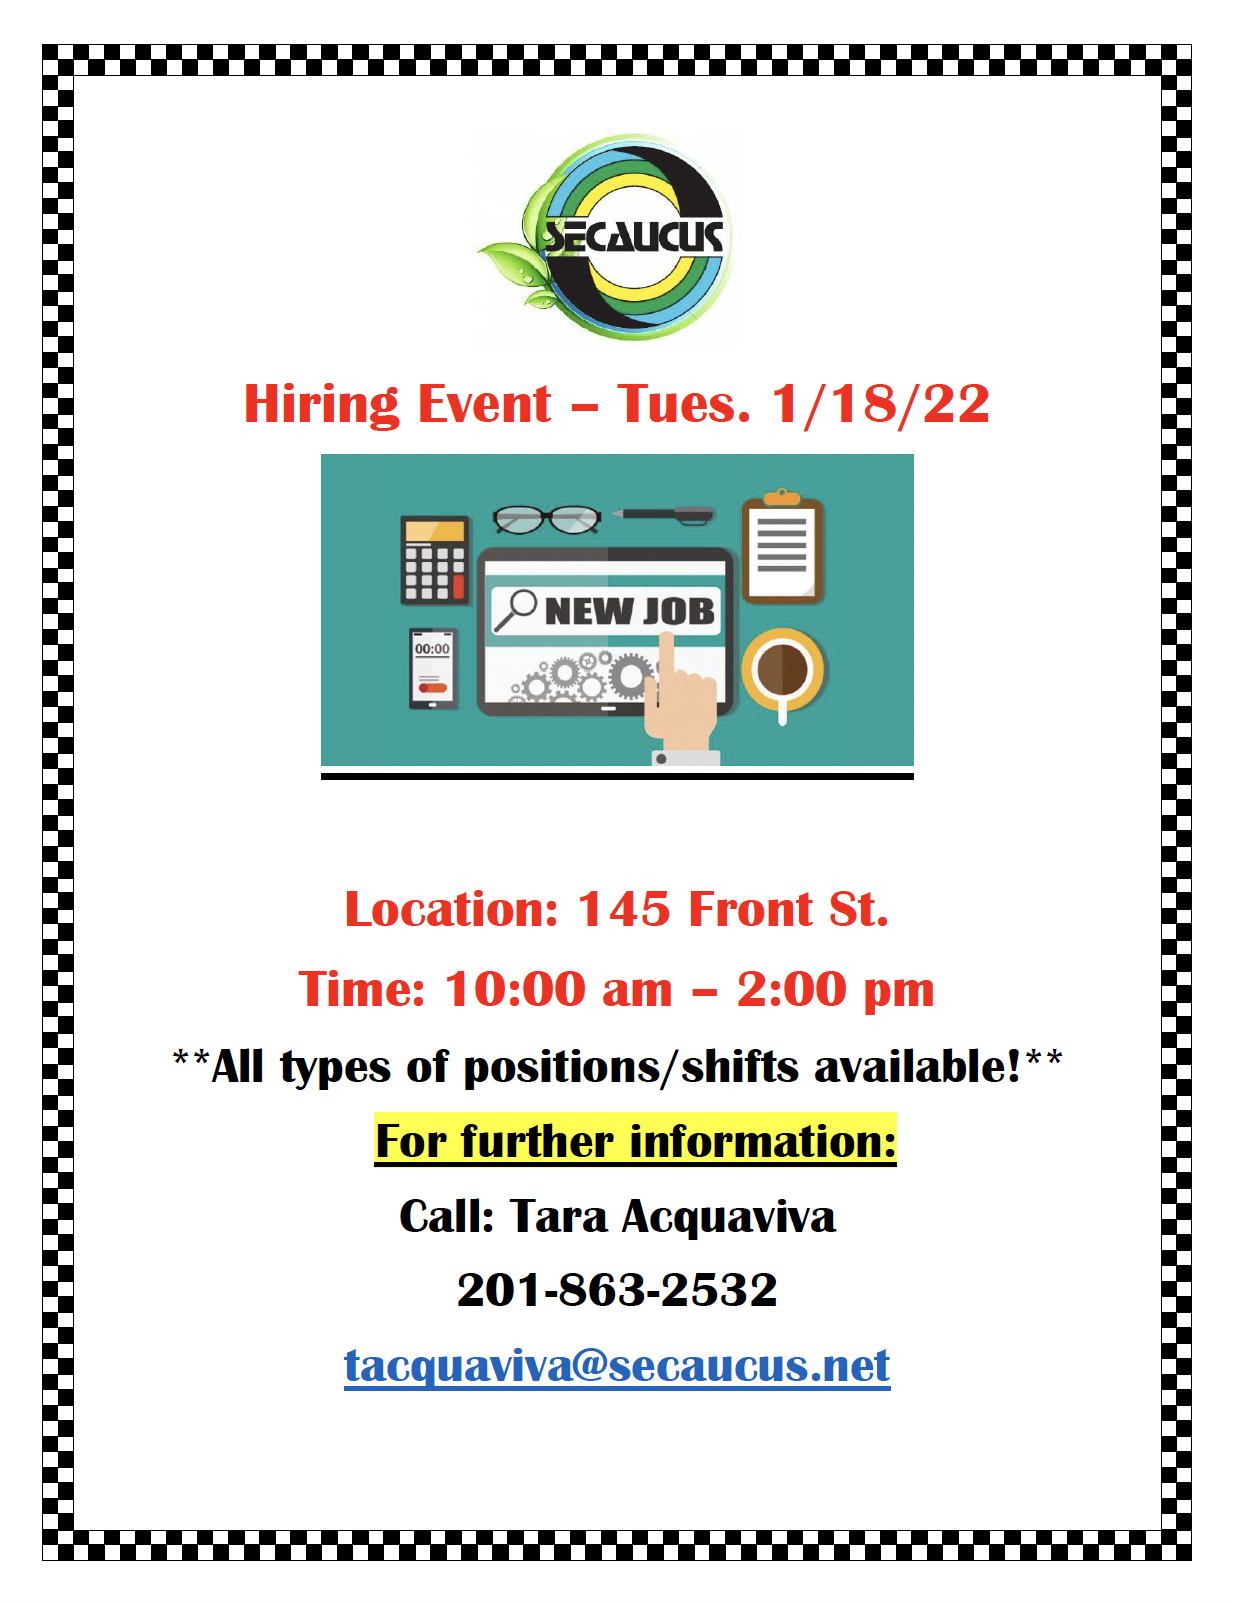 January hiring event